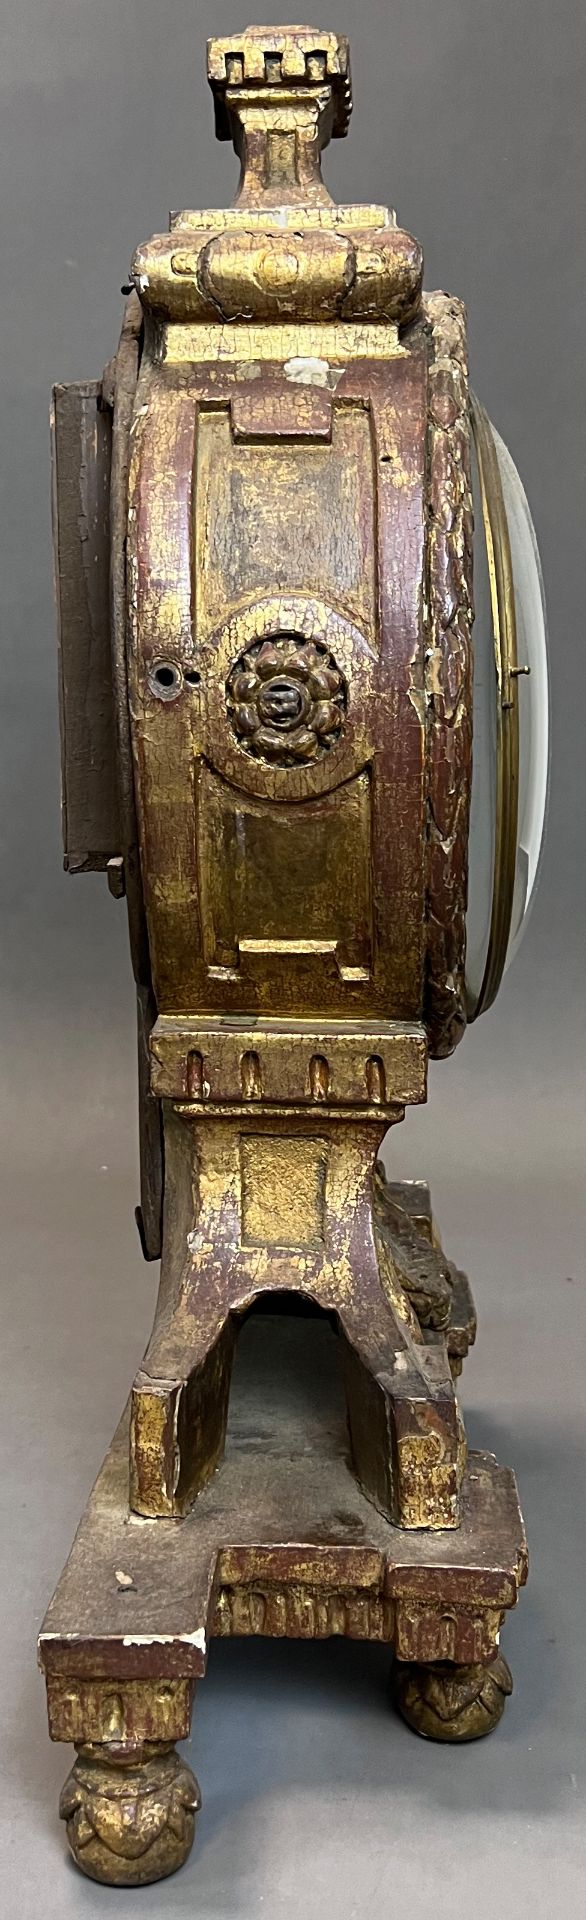 Antique pendulum clock. Wood. Probably Austria. Late 18th century. - Image 4 of 17